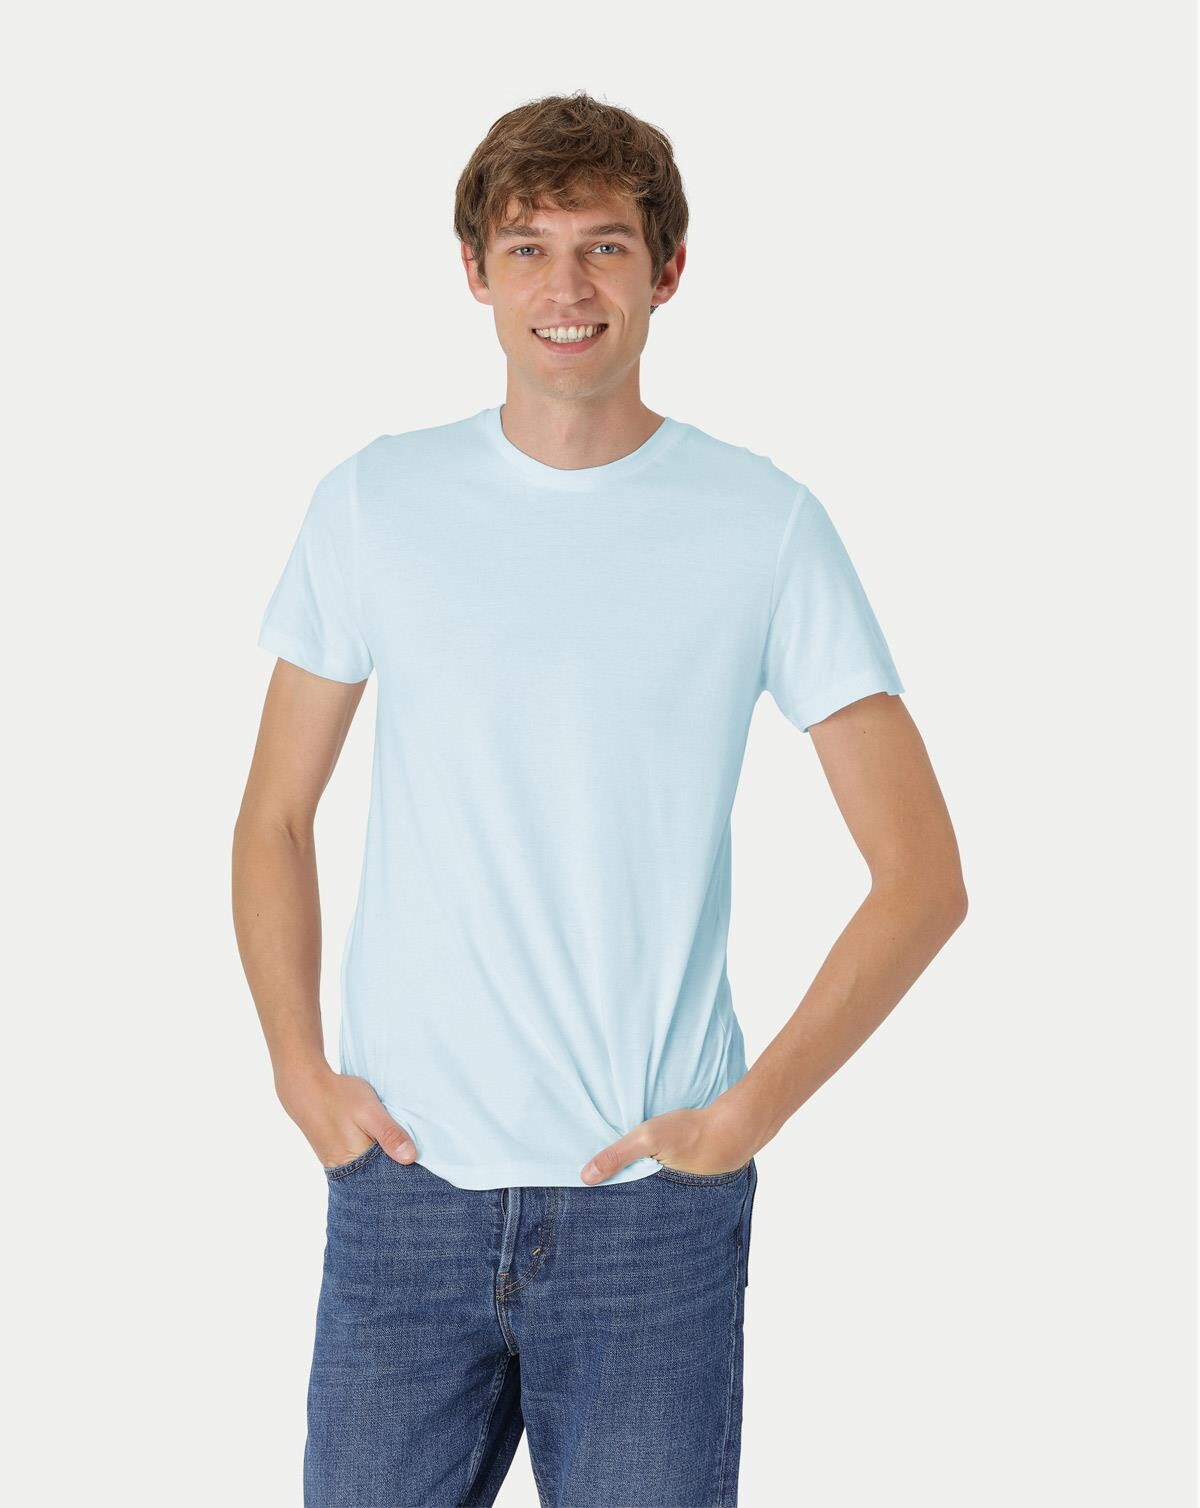 Neutral Økologisk T-shirt til - Tætsiddende (Lyseblå, S)